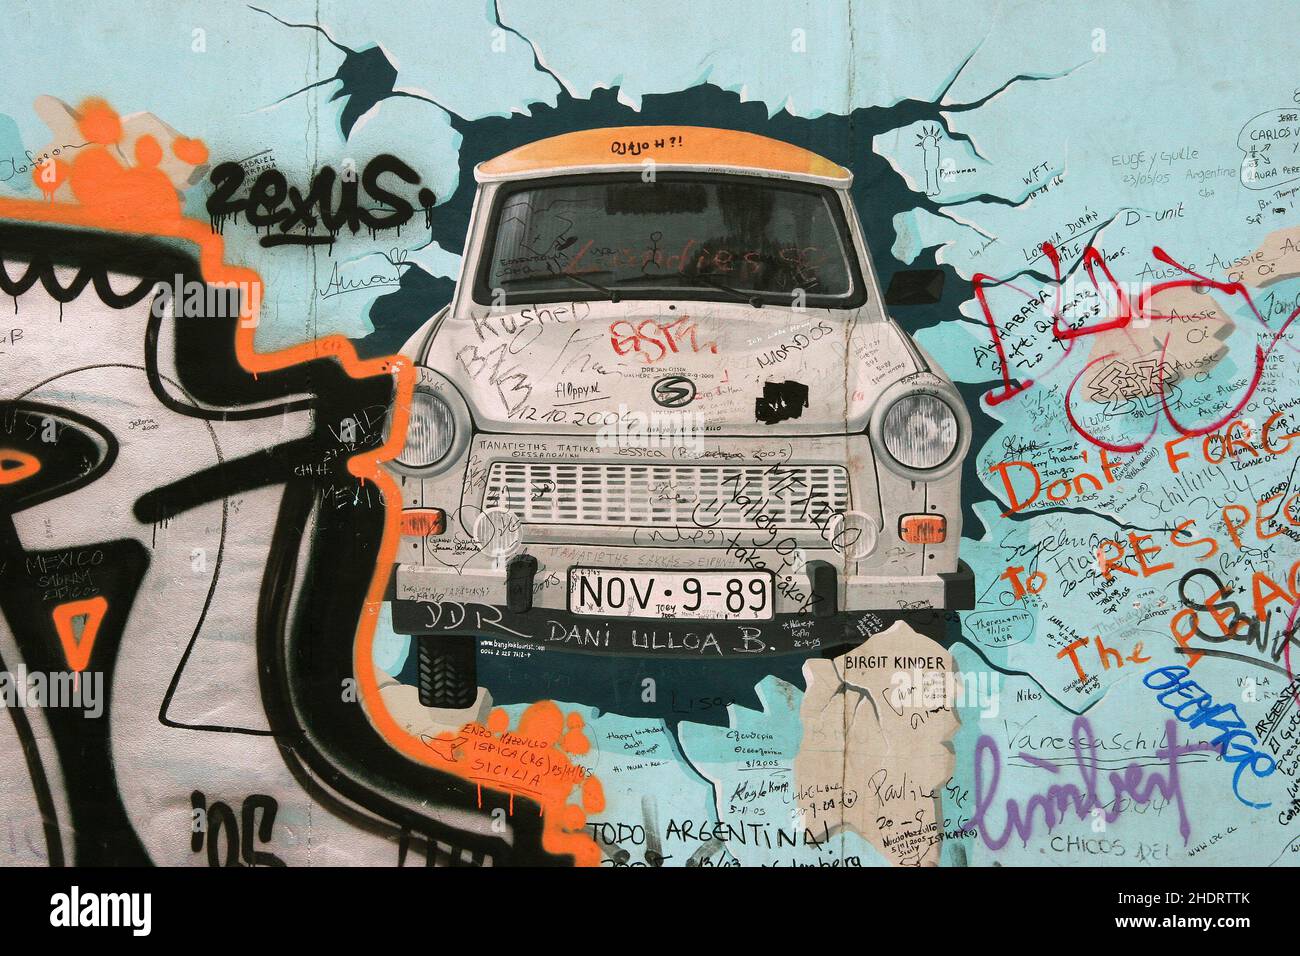 berlin wall, trabant, breaking, trabants Stock Photo